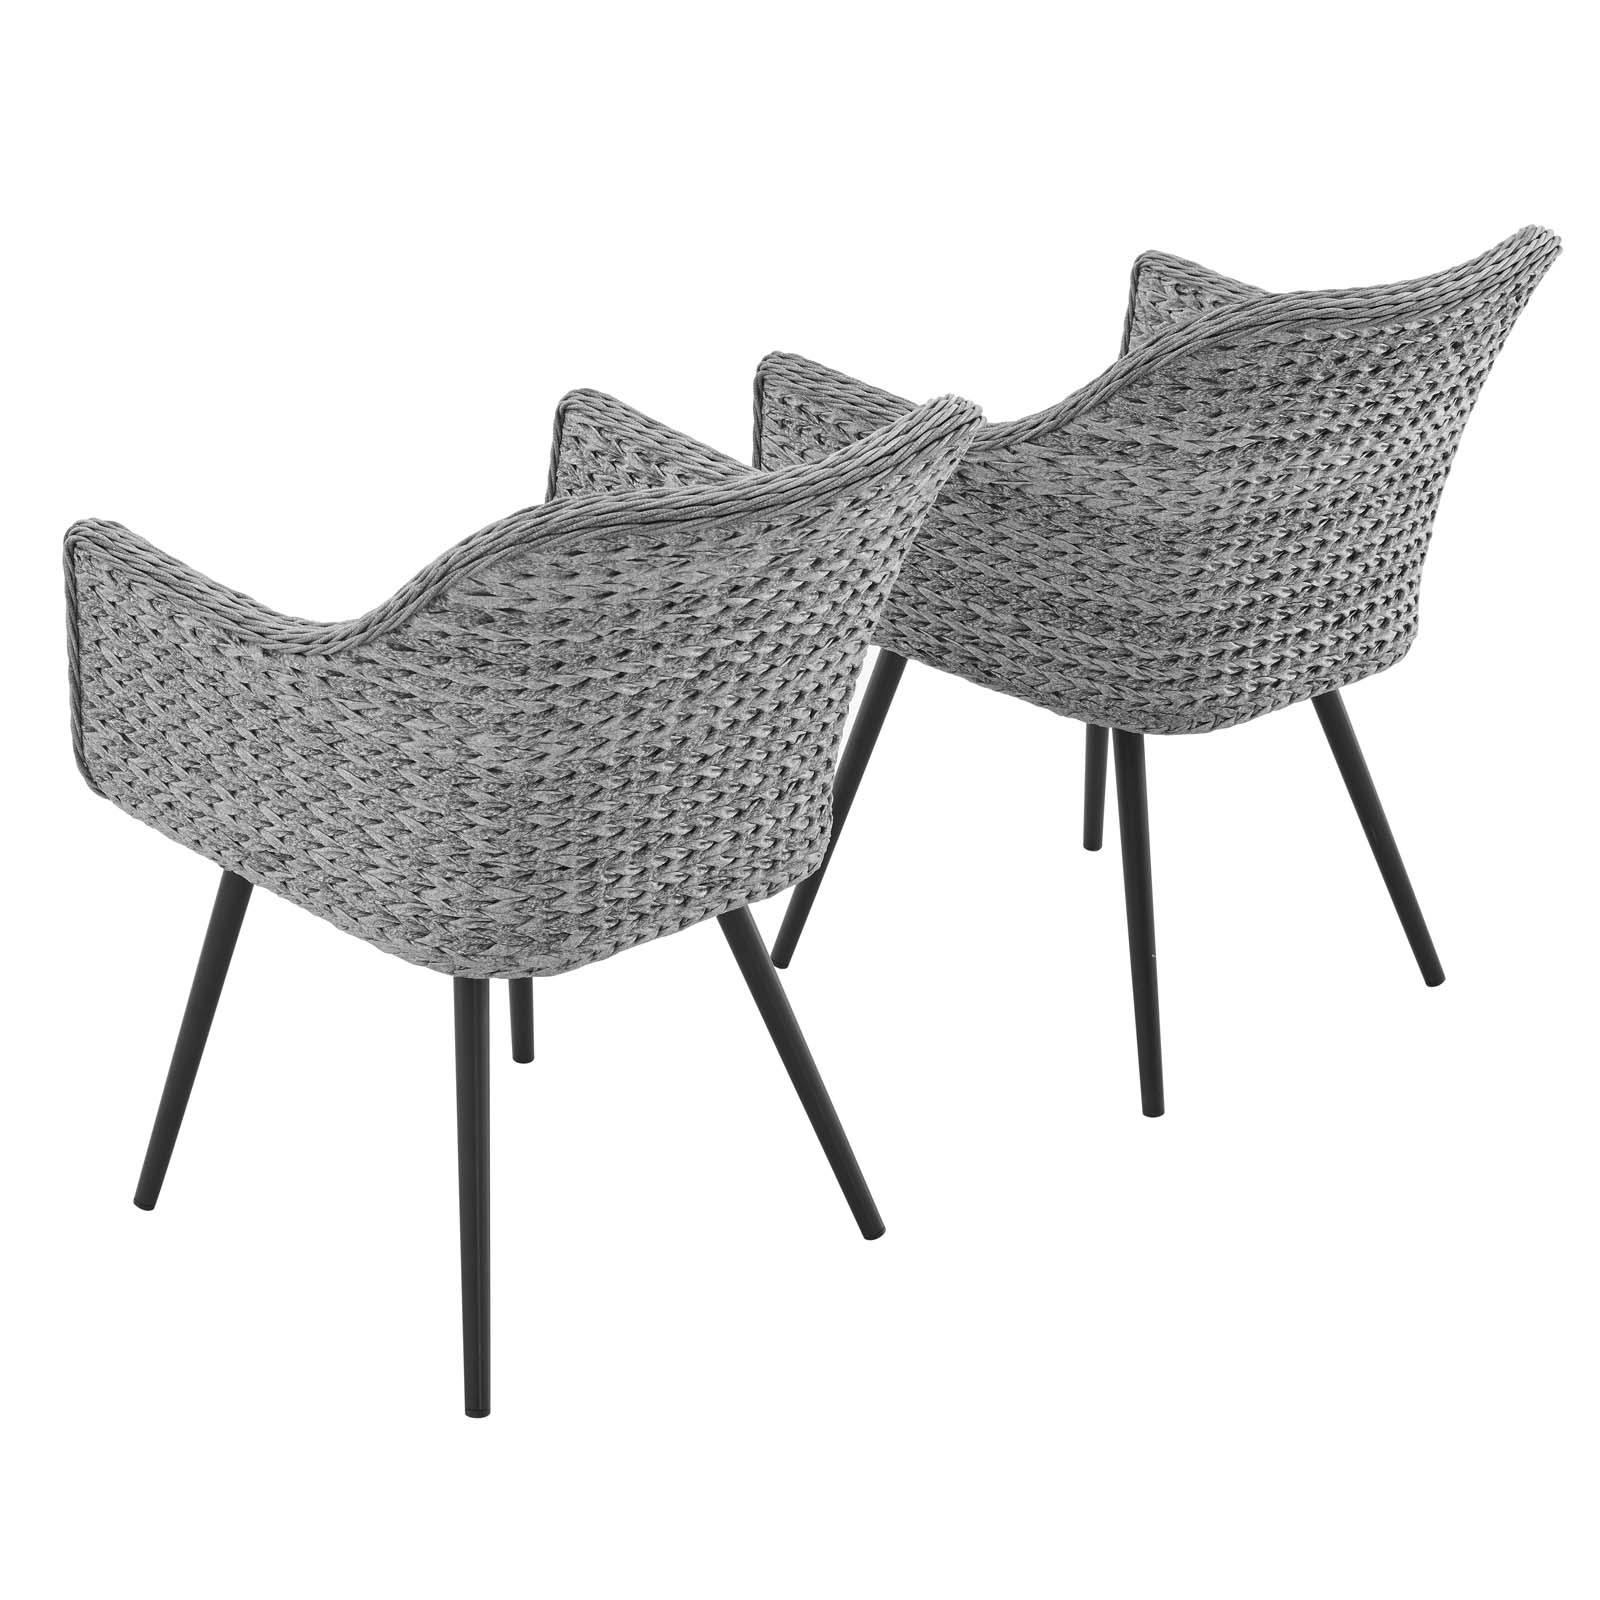 Modern Contemporary Urban Design Outdoor Patio Balcony Garden Furniture Lounge Chair Armchair, Set of Two, Rattan Wicker, Grey Gray - image 3 of 6